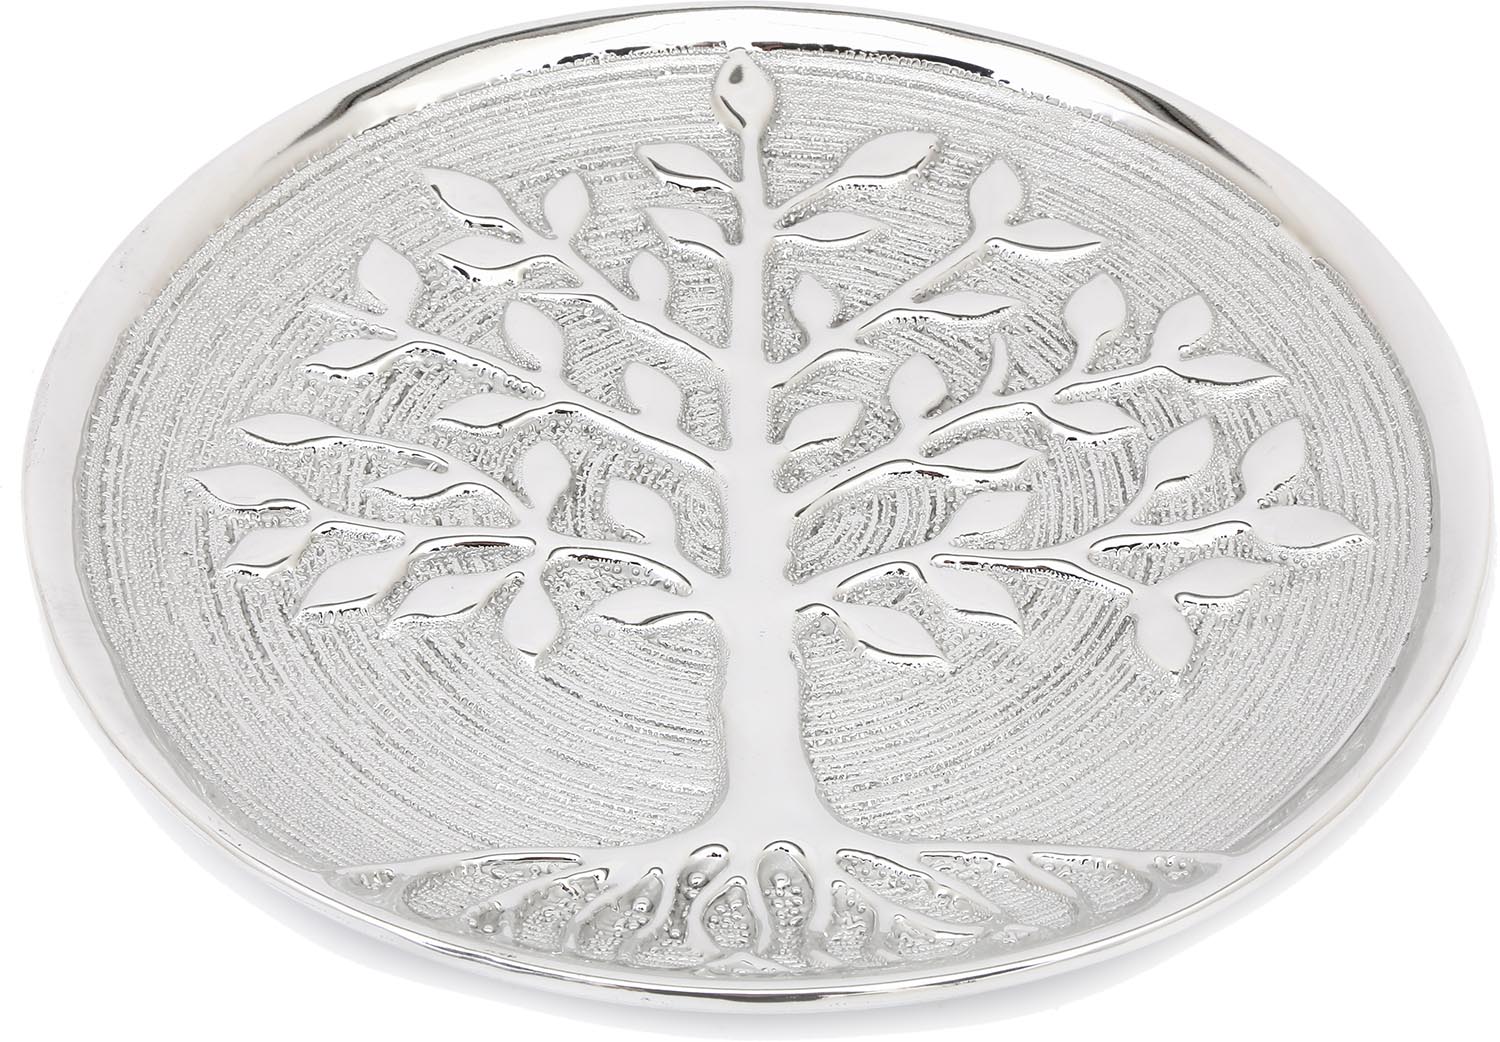 Vide poche en céramique Tree of life 27 cm